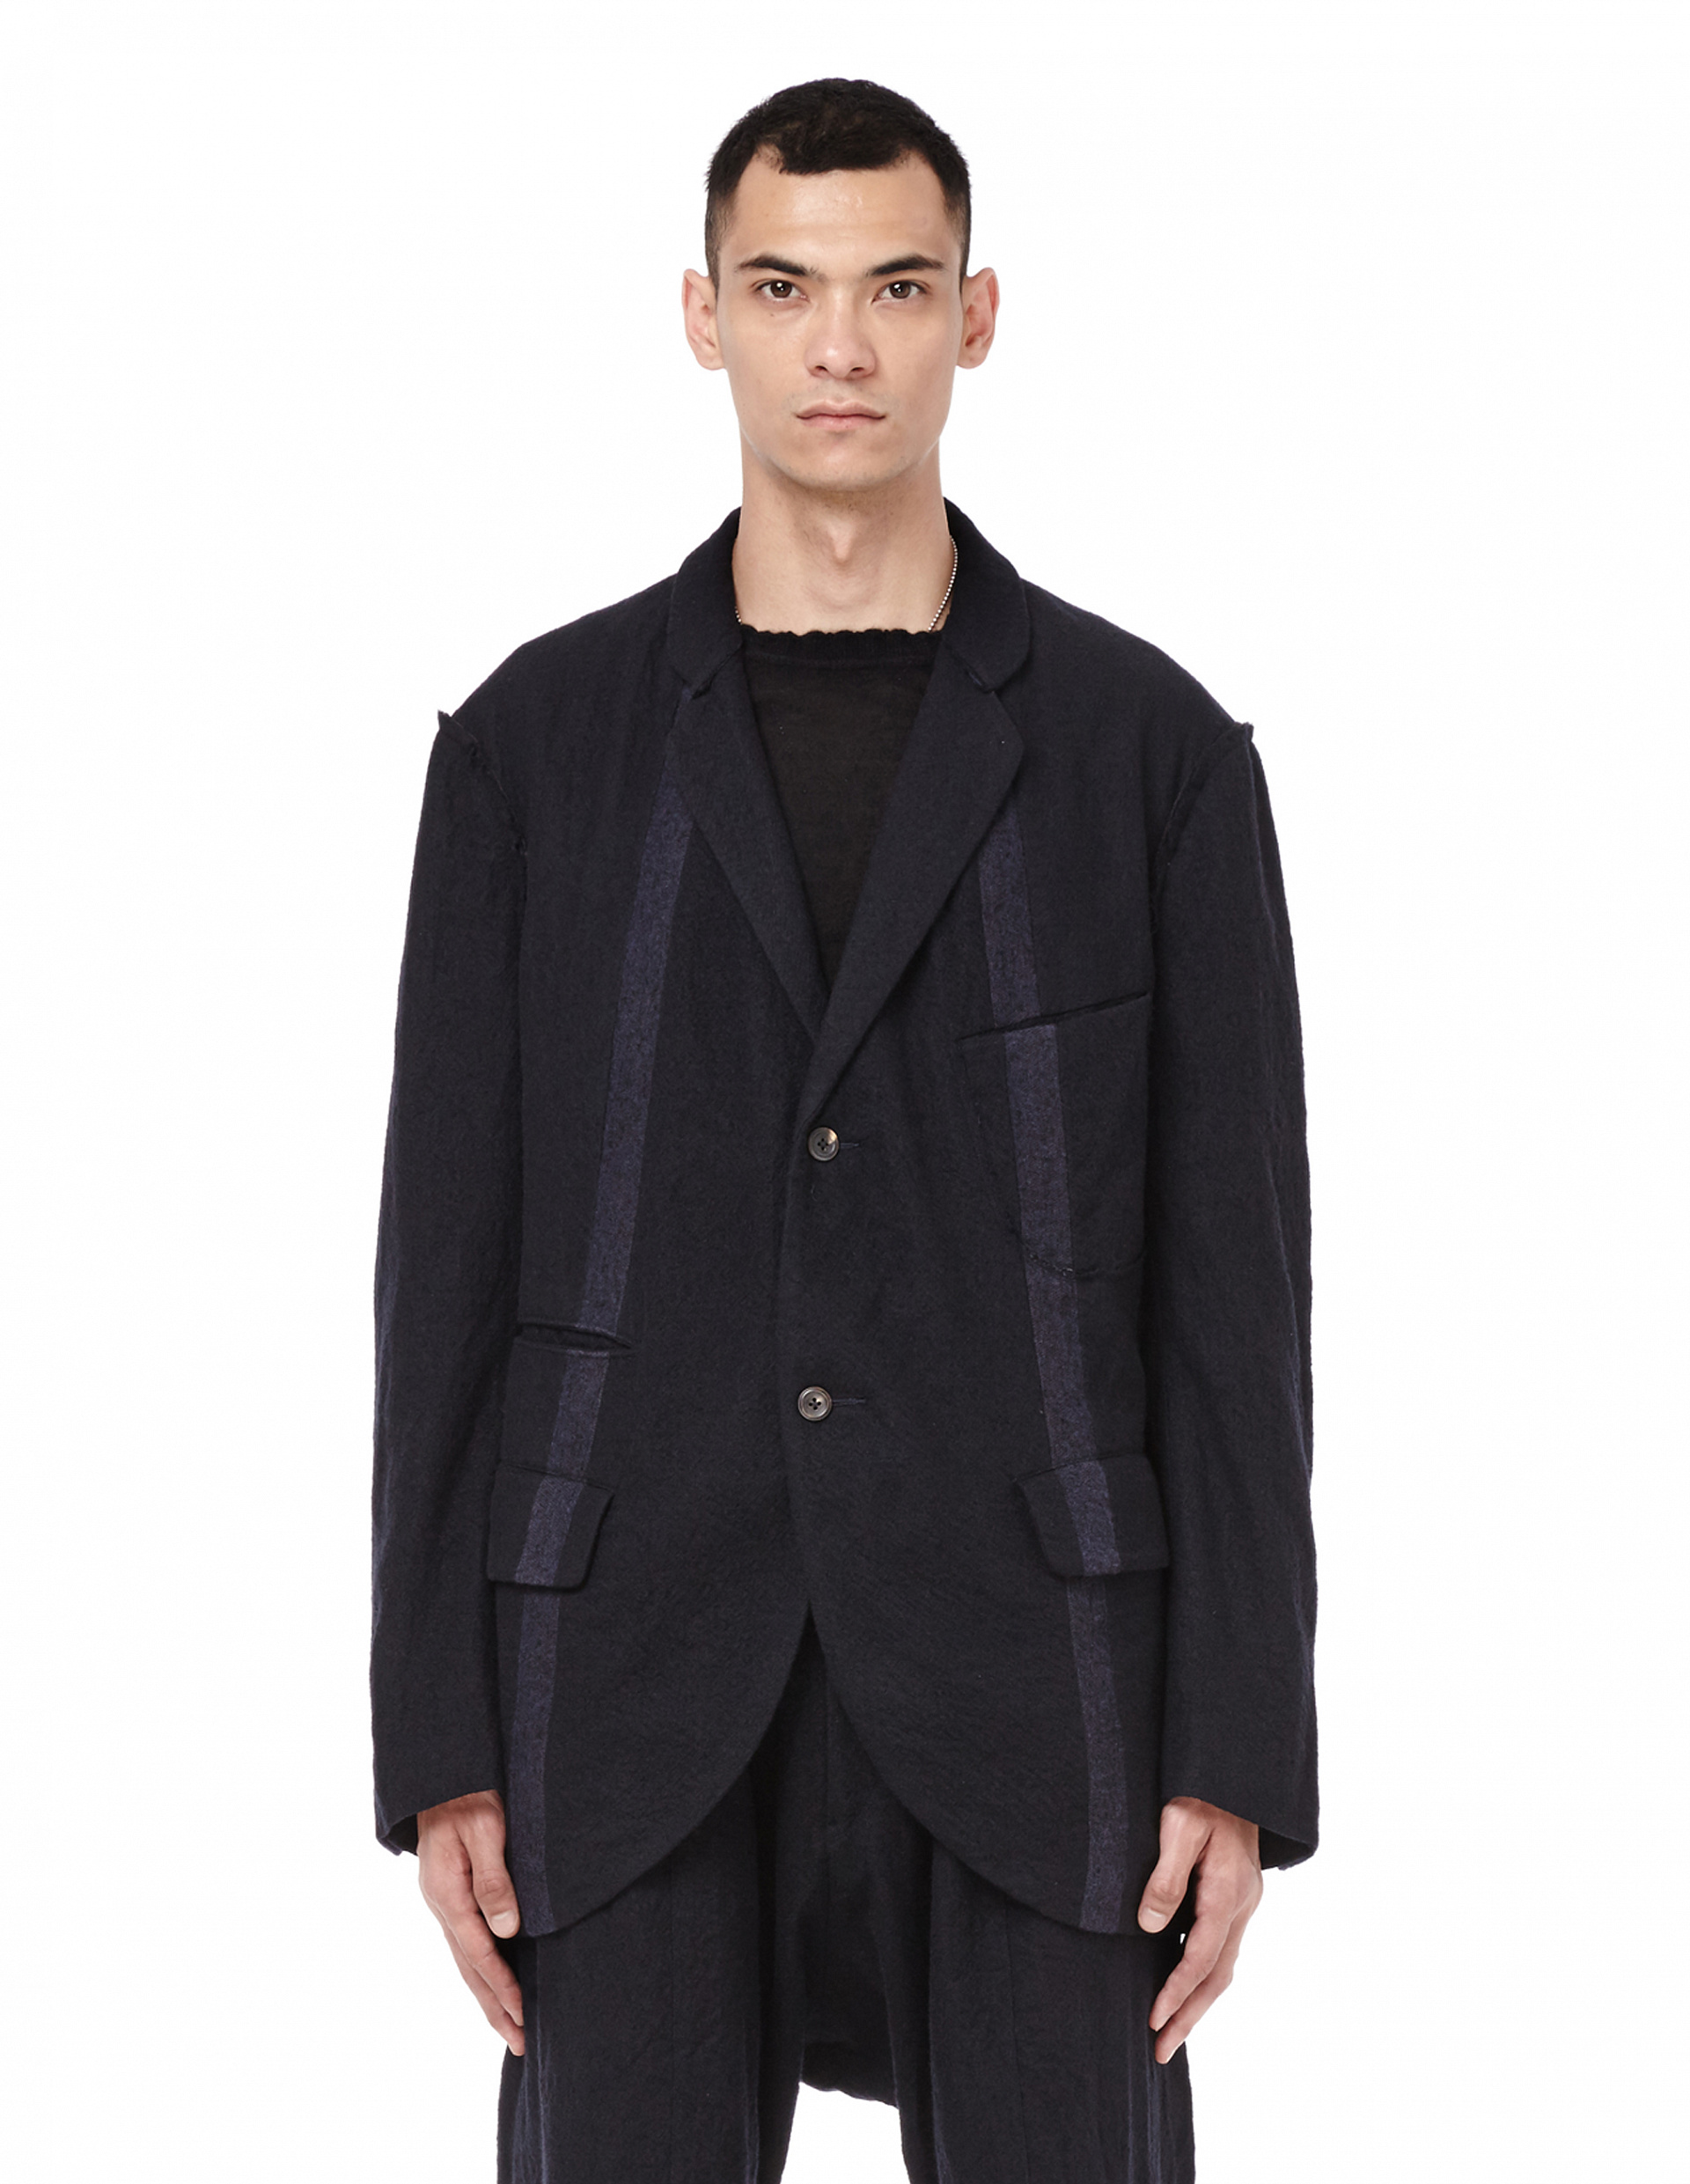 Buy Ziggy Chen men black wool jacket for $585 online on SVMOSCOW, 0M1630906